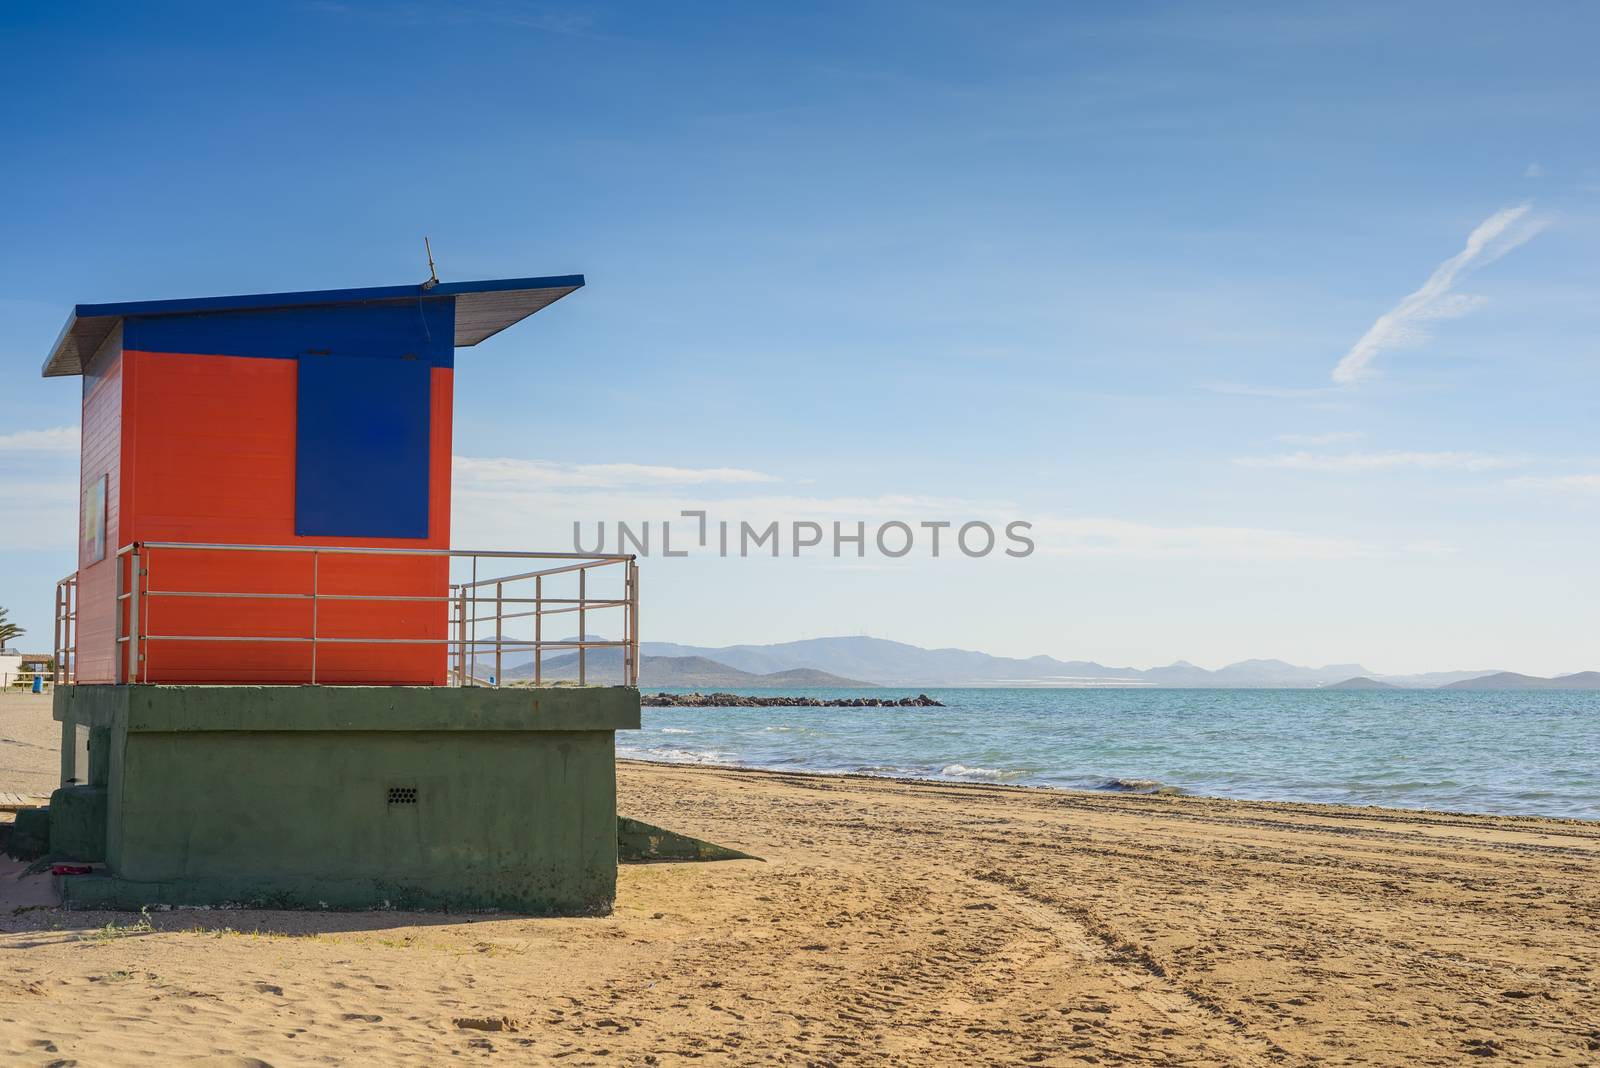 Lifeguard house on the beach by anytka